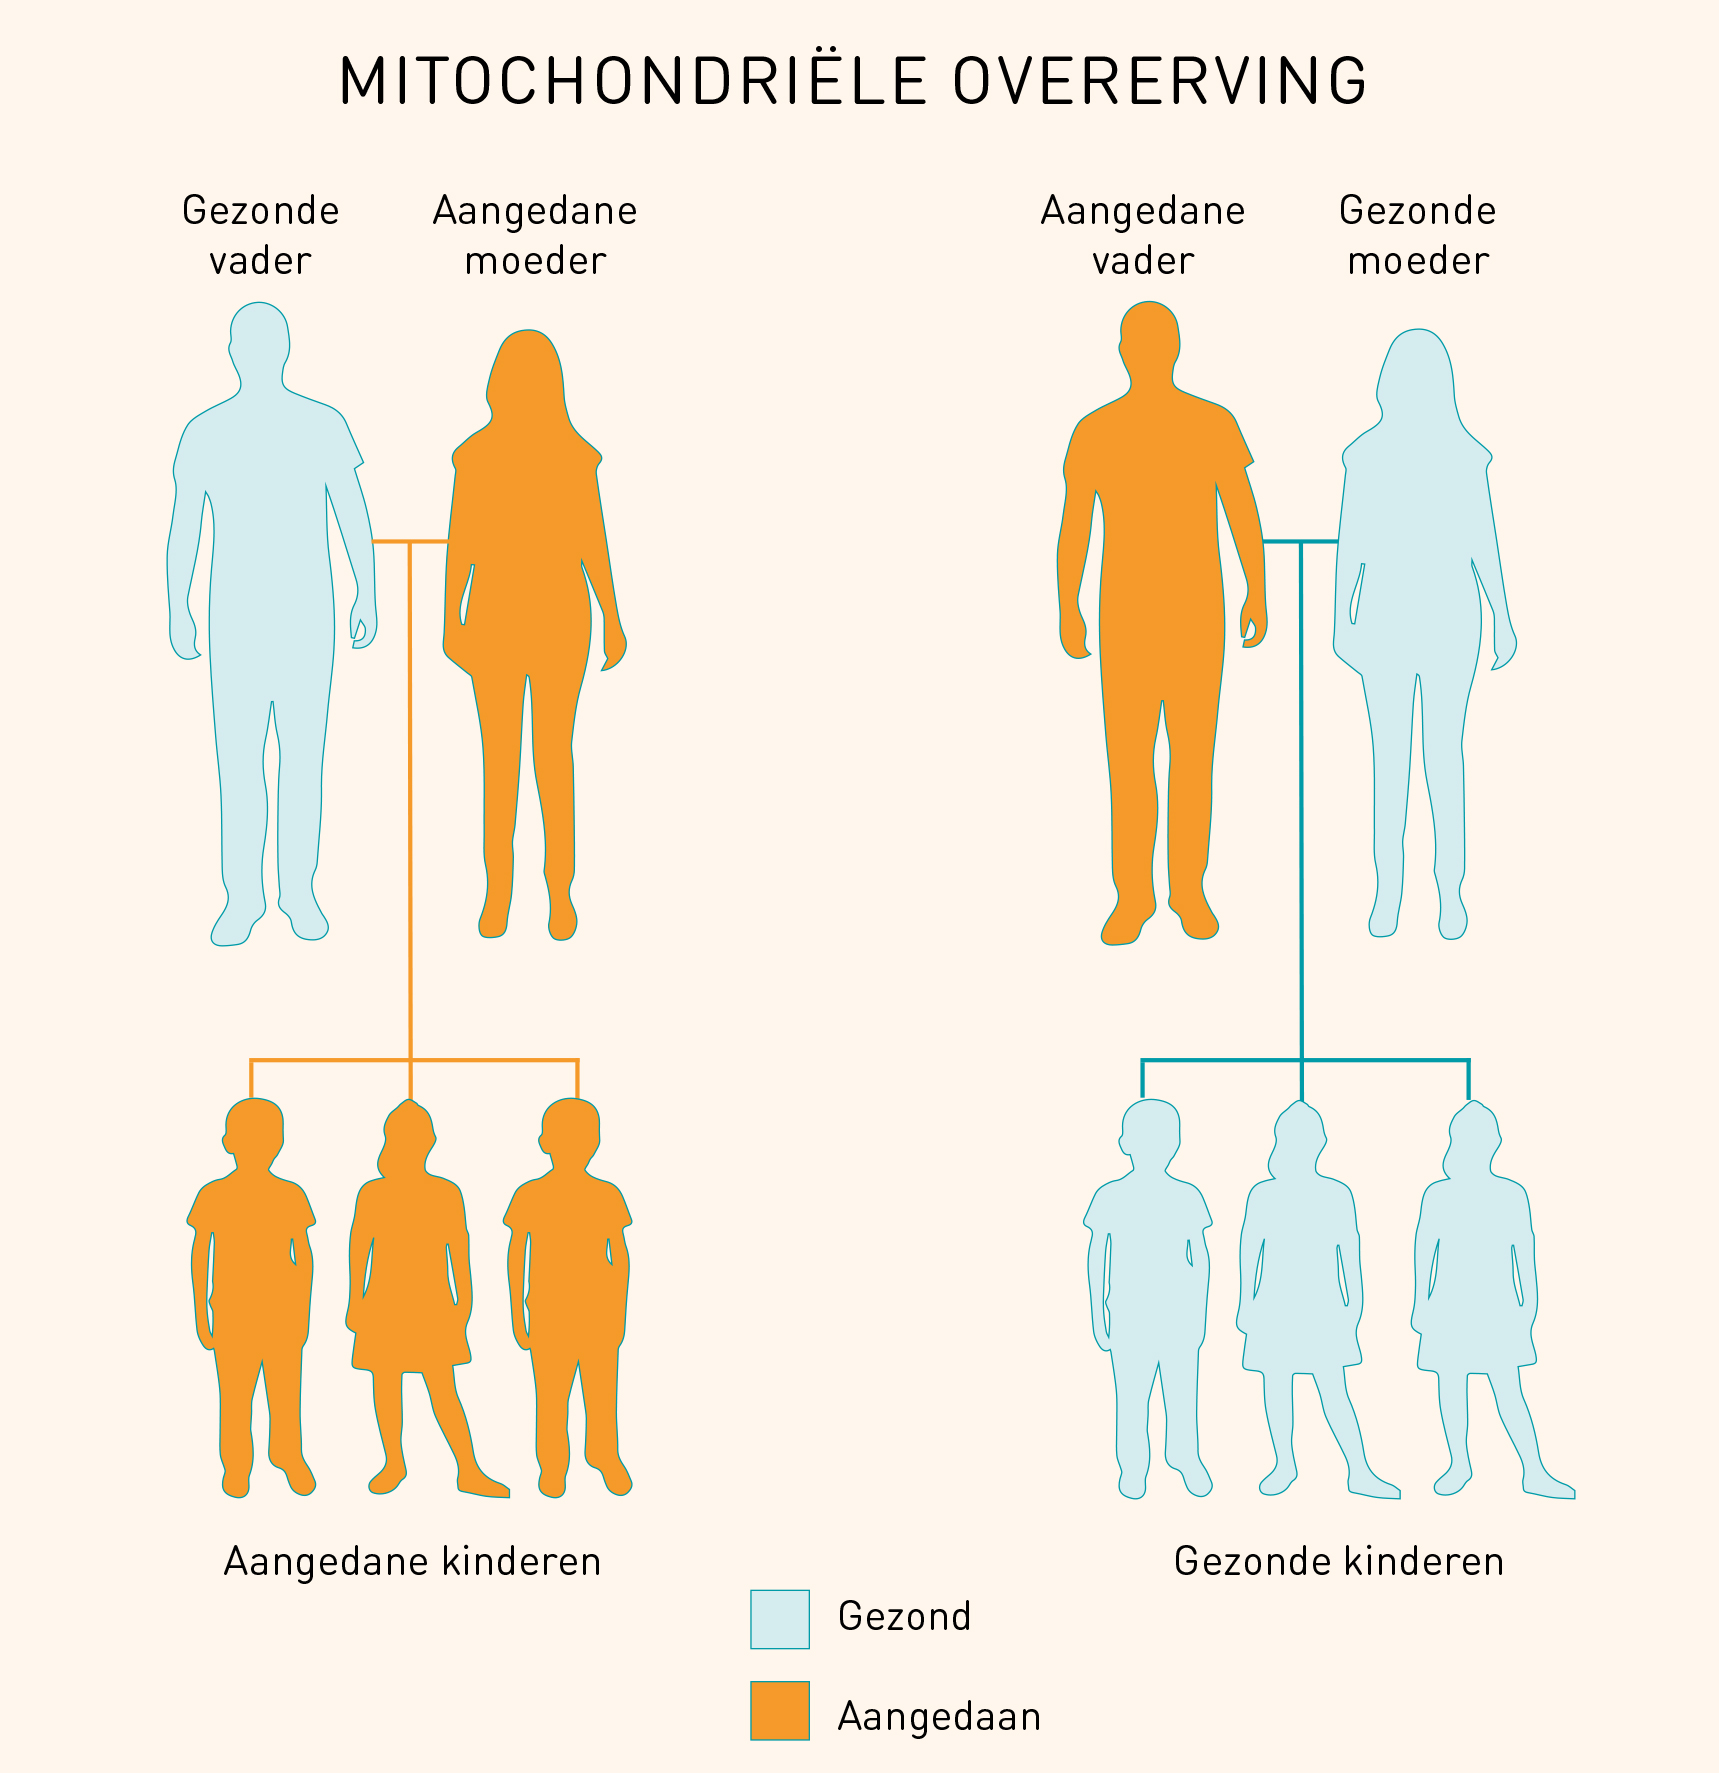 Stamboom mitochondriele overerving